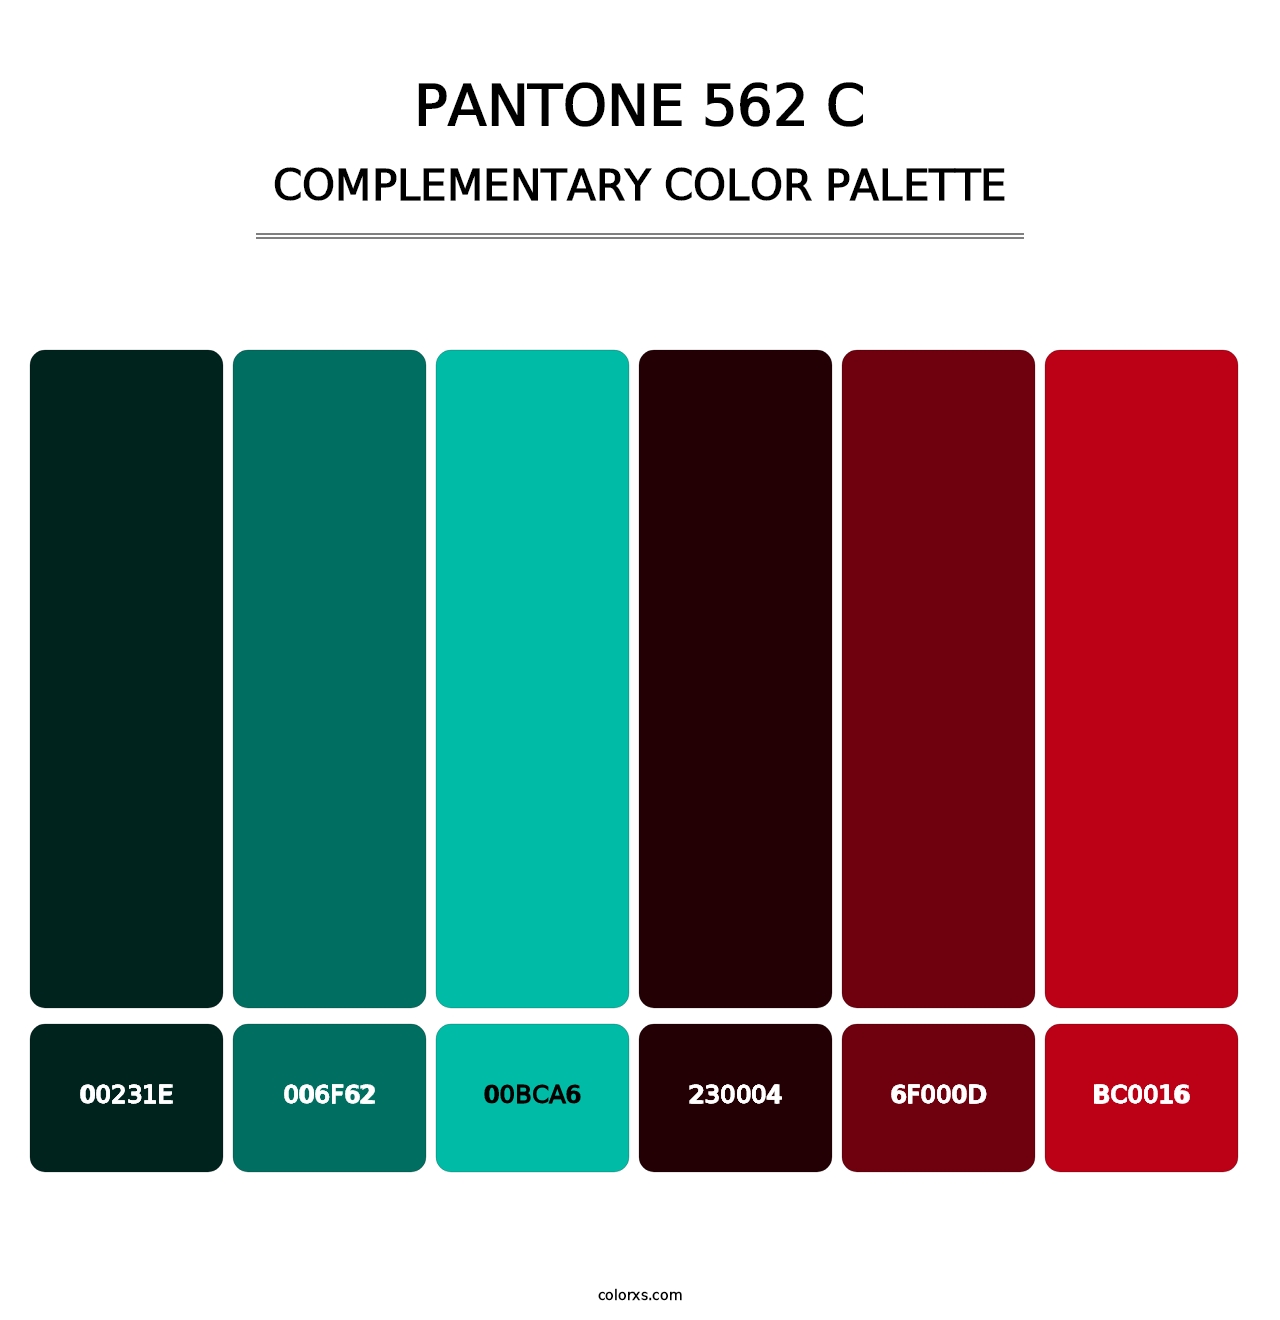 PANTONE 562 C - Complementary Color Palette